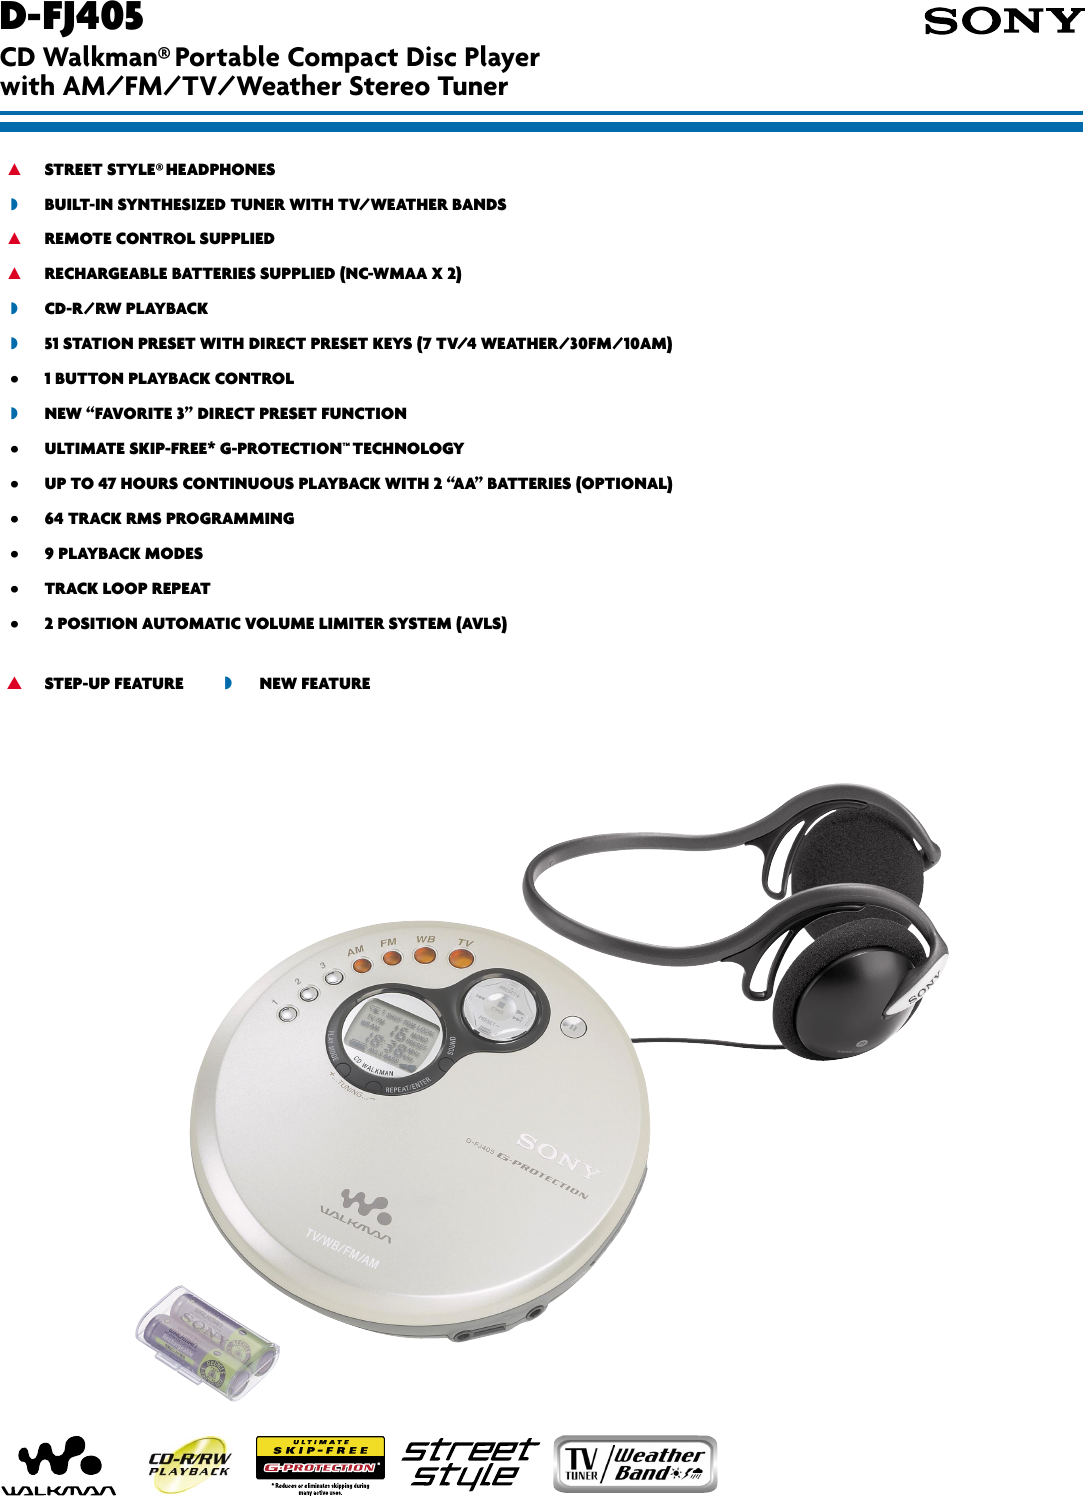 Page 1 of 2 - Sony Sony-Sony-Cd-Walkman-Portable-Compact-Disc-Player-Users-Manual- SON 907; D-FJ405  Sony-sony-cd-walkman-portable-compact-disc-player-users-manual